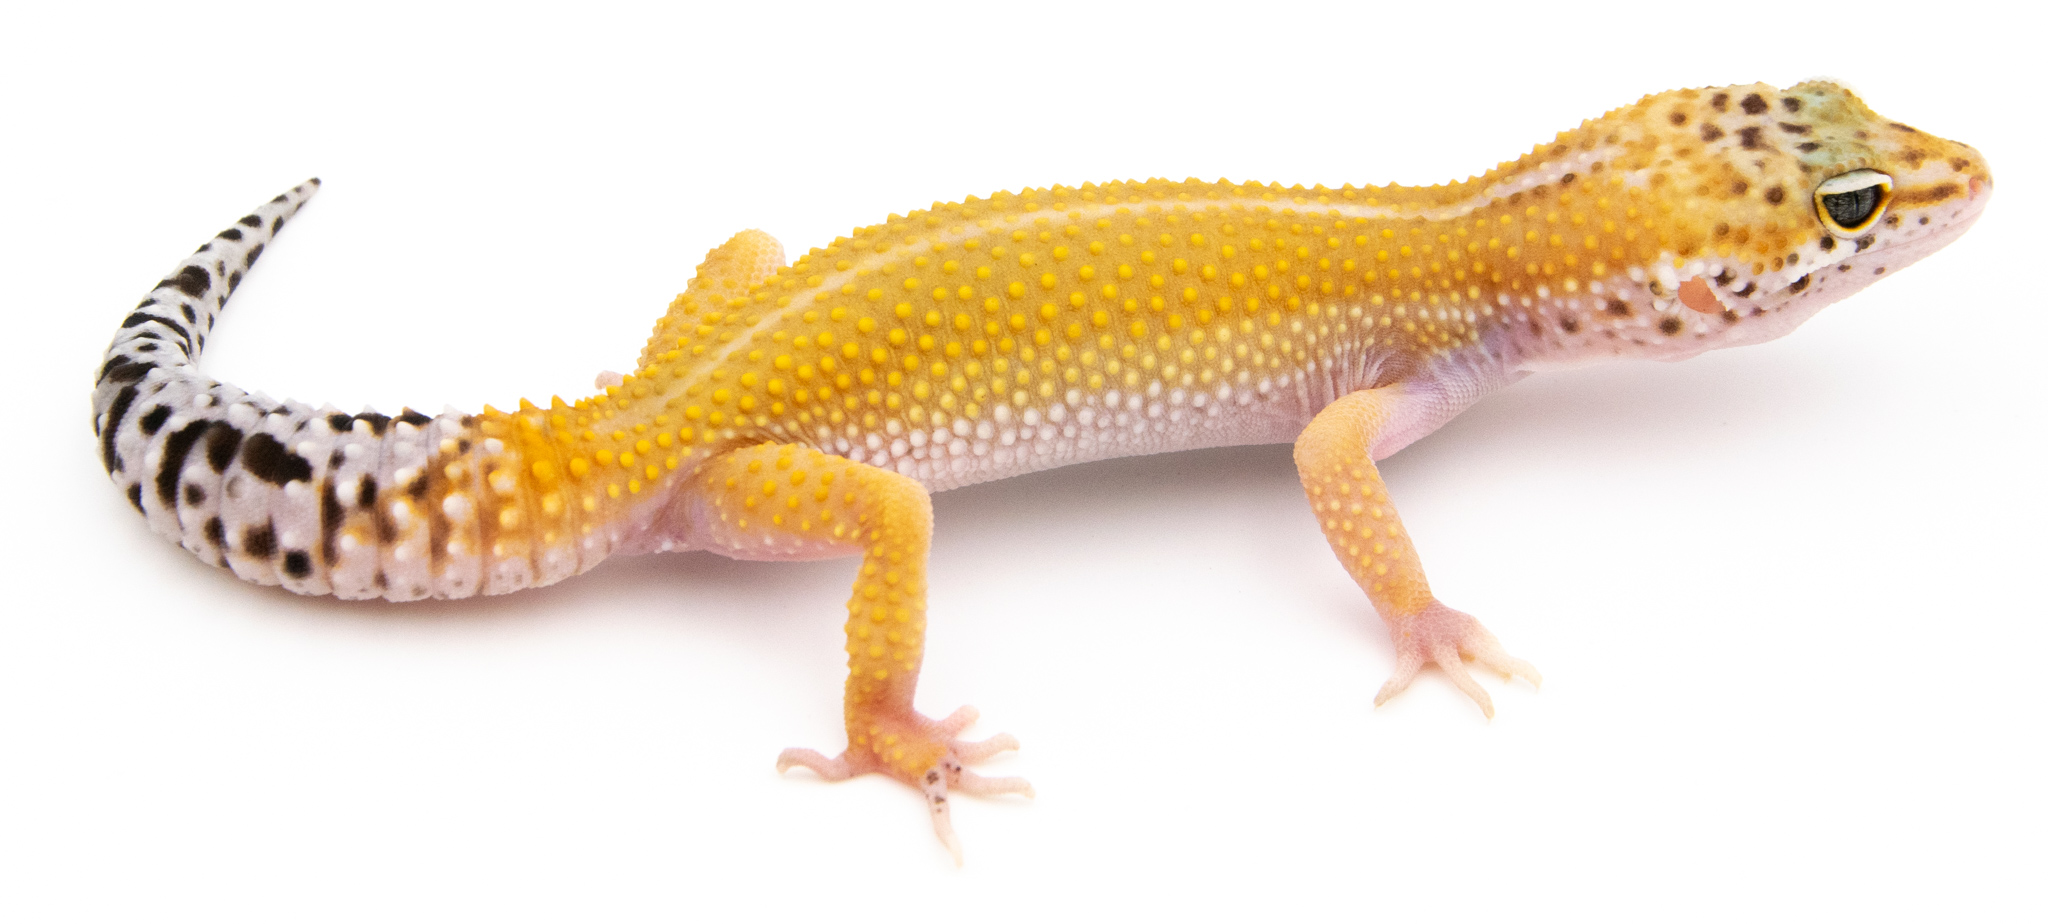 EJ116 - Gecko Léopard - Eublepharis Macularius Super Hypo Tangerine het Bell - non sexé  - NC 2021